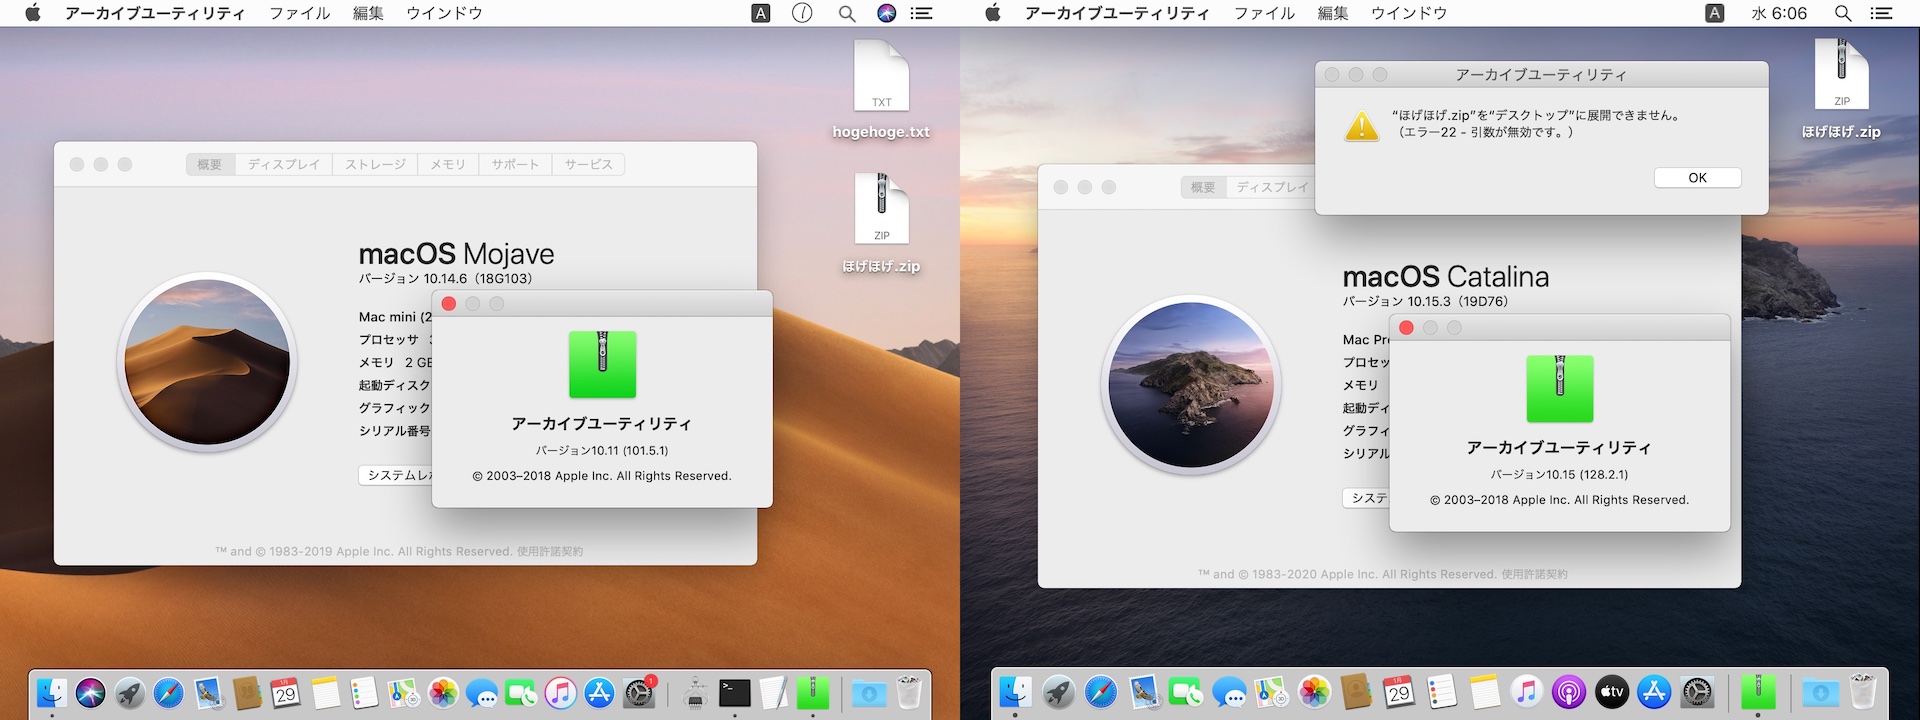 macOS 10.14 MojaveとmacOS 10.15 Catalinaのアーカイブユーティリティ